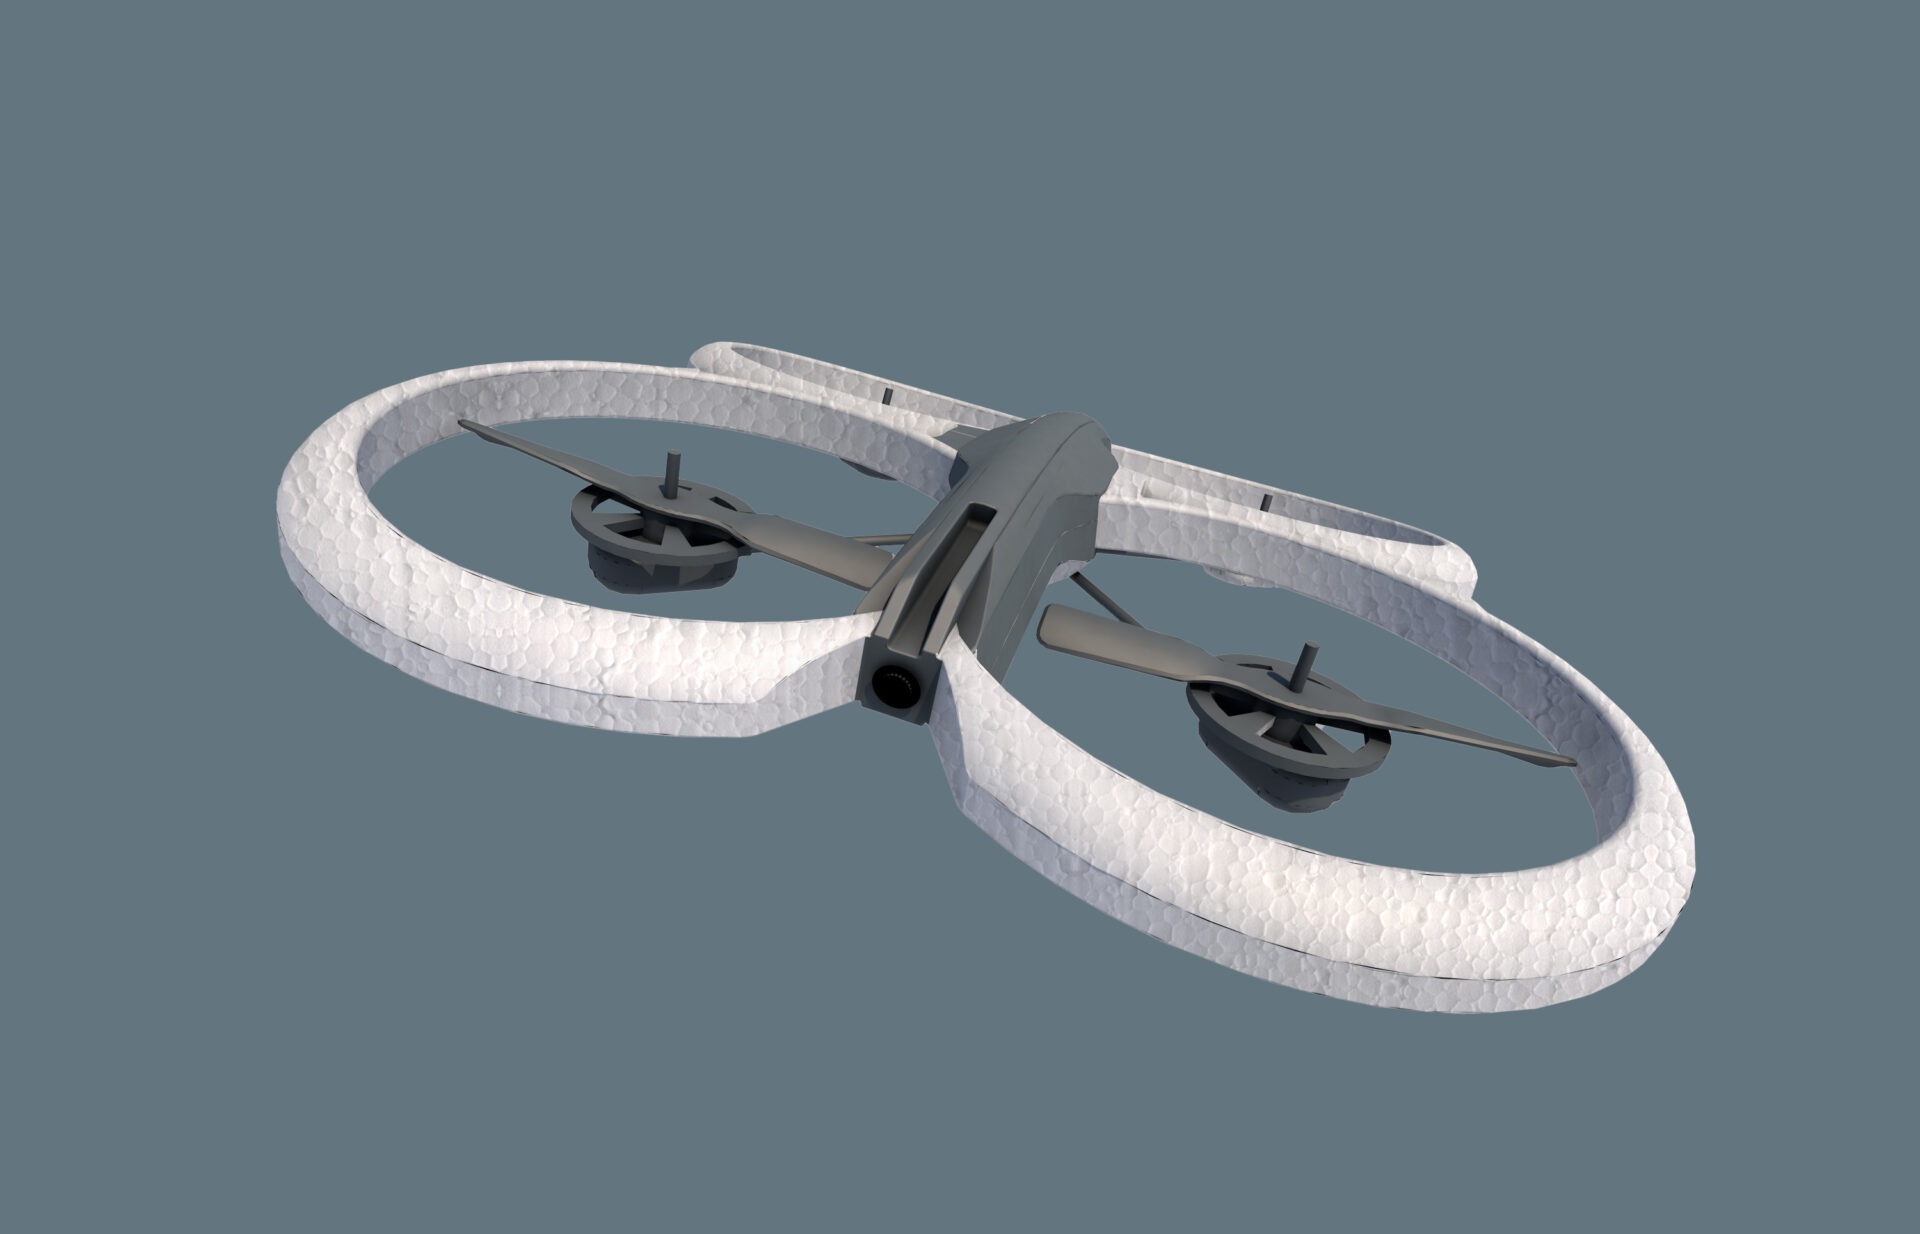 Prototypen drone 3 real 2